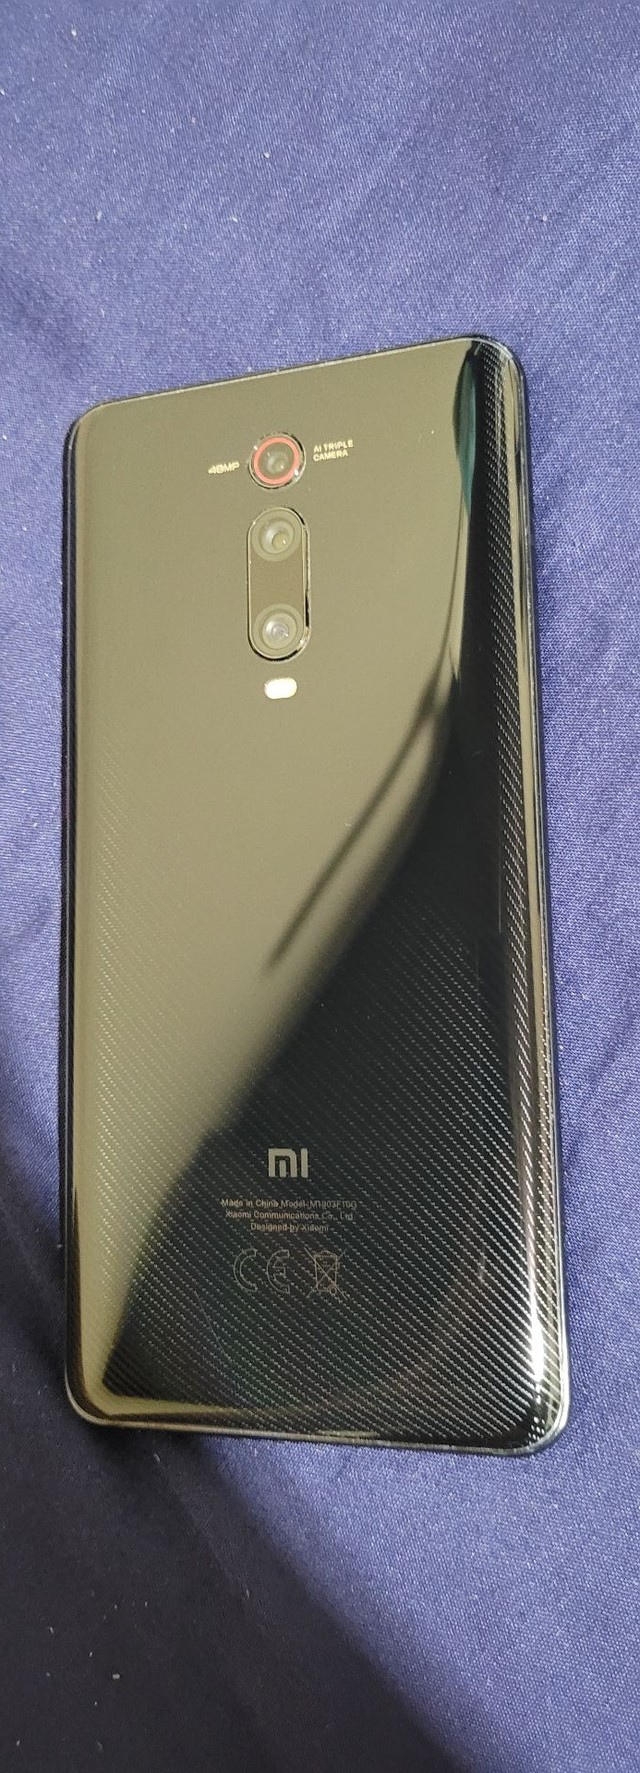 Celular Xiaomi MI 9T (vendo ou troco) - Foto 4